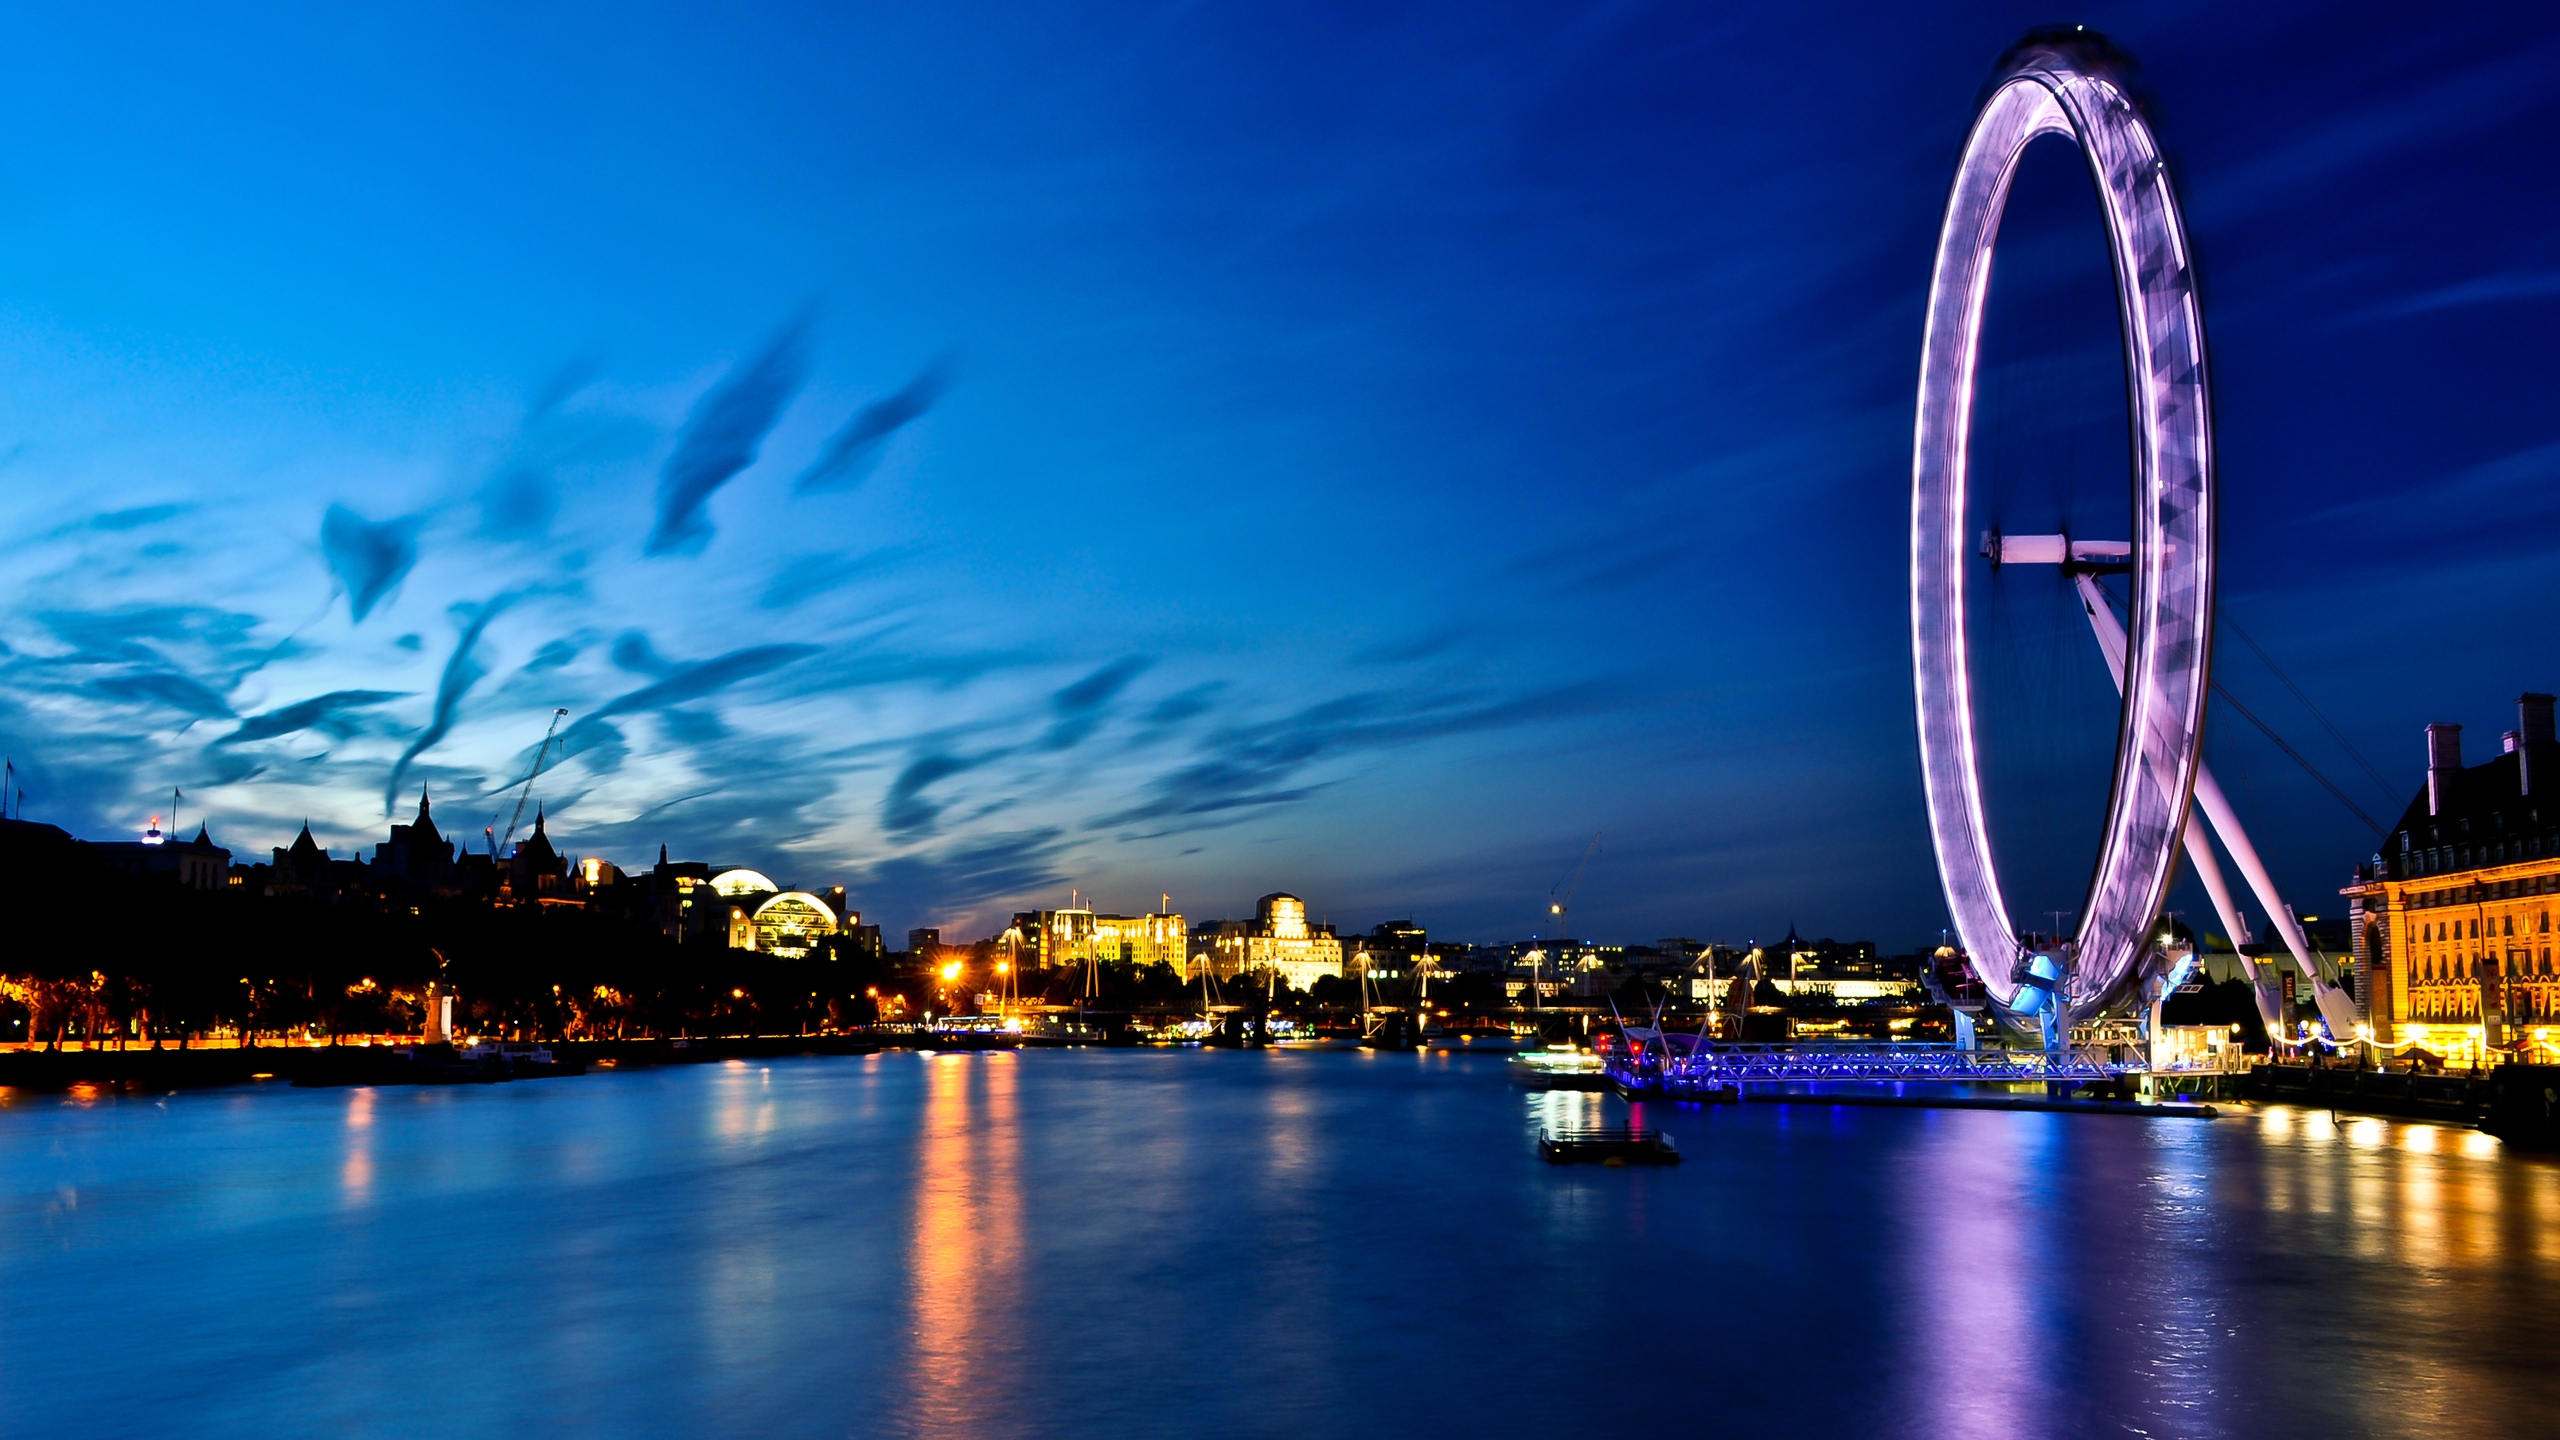 London Eye View for 2560x1440 HDTV resolution